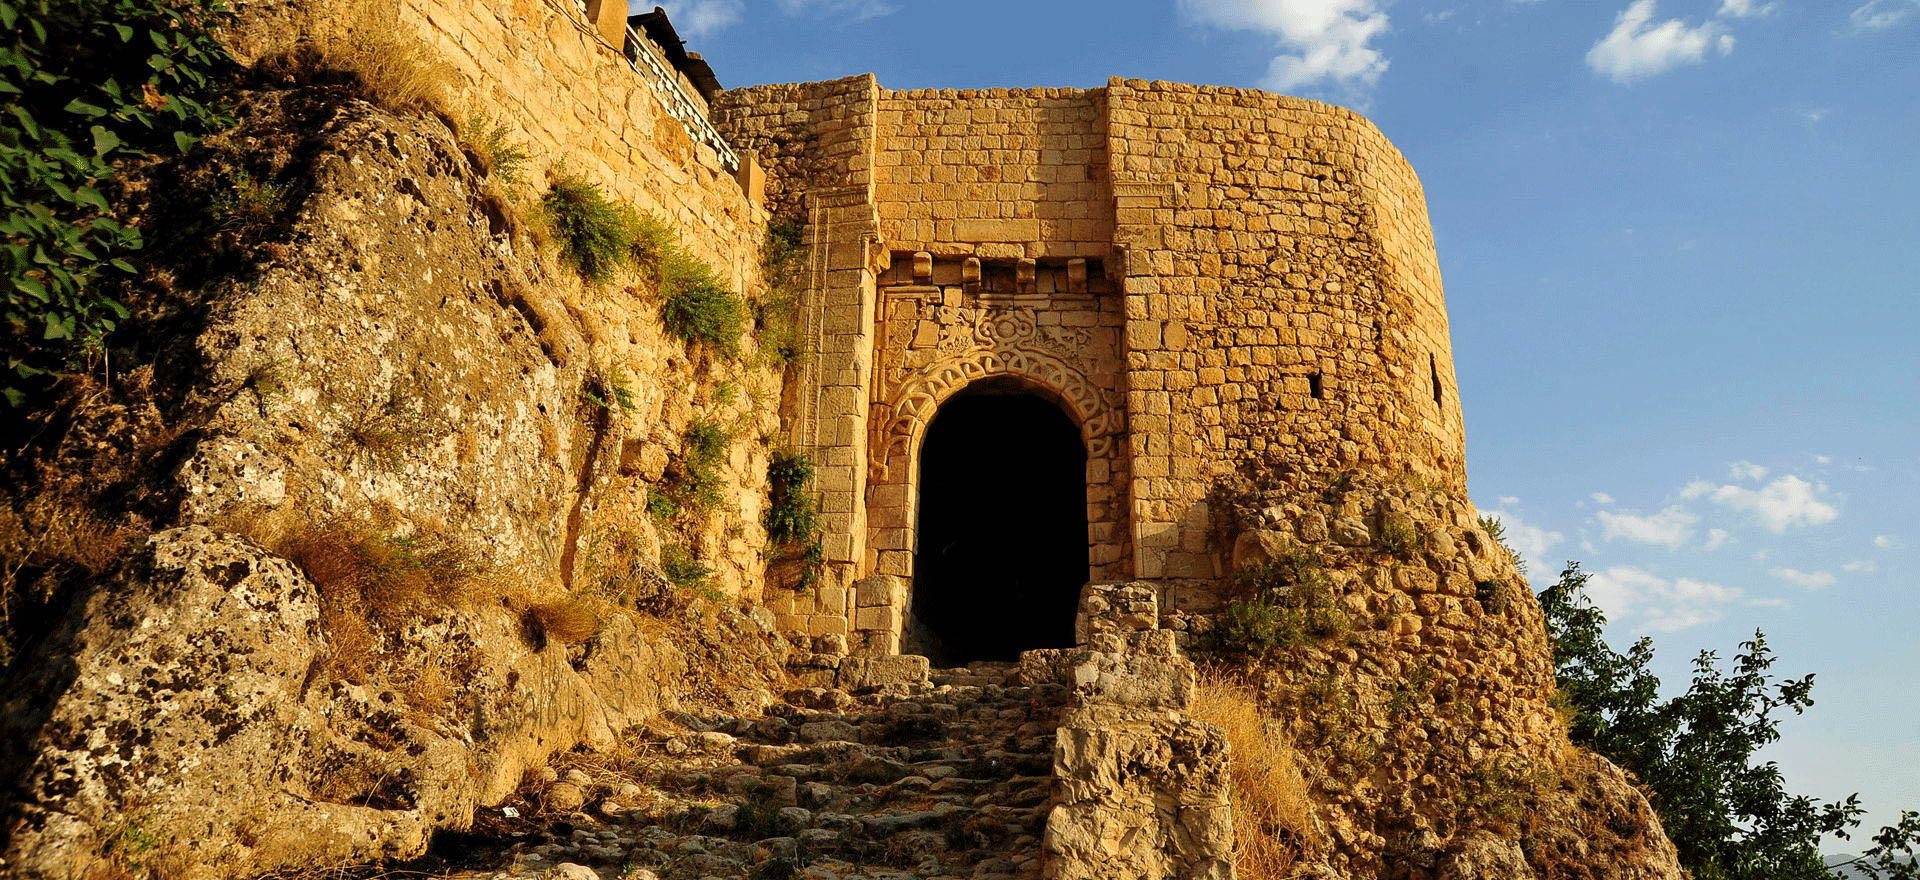 Gateway at Erbil citadel - Iraq Holidays and Tours